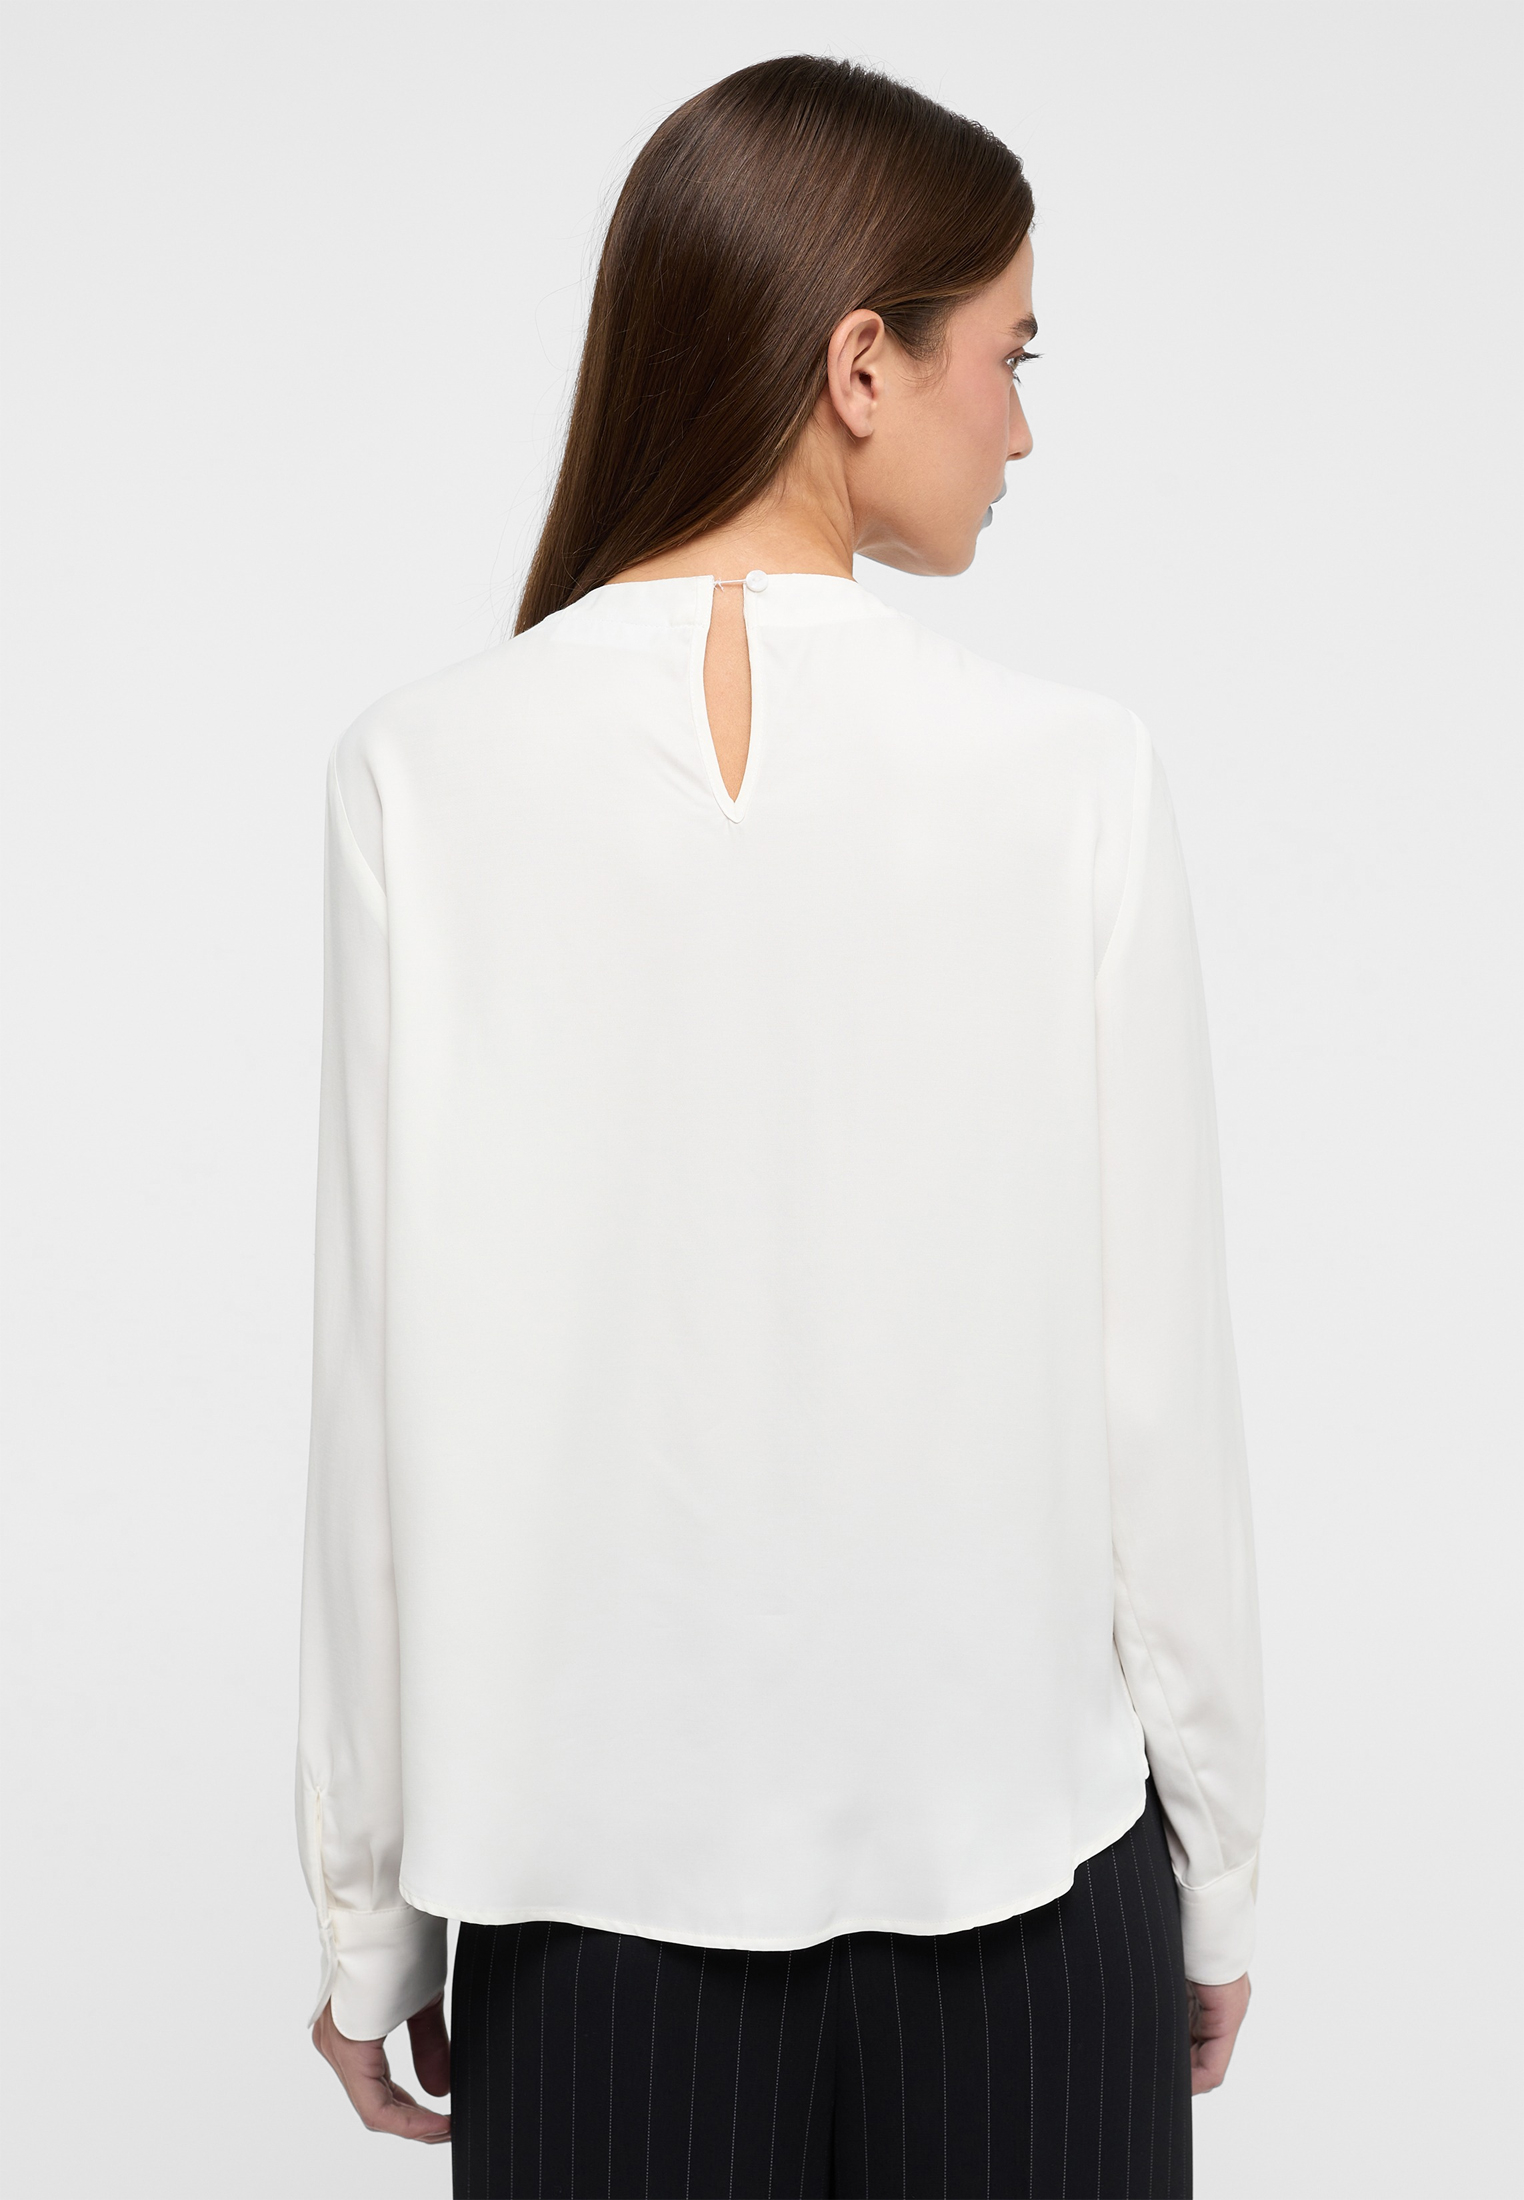 Viscose Shirt Bluse in off-white unifarben | off-white | 40 | Langarm |  2BL04240-00-02-40-1/1 | Blusenshirts